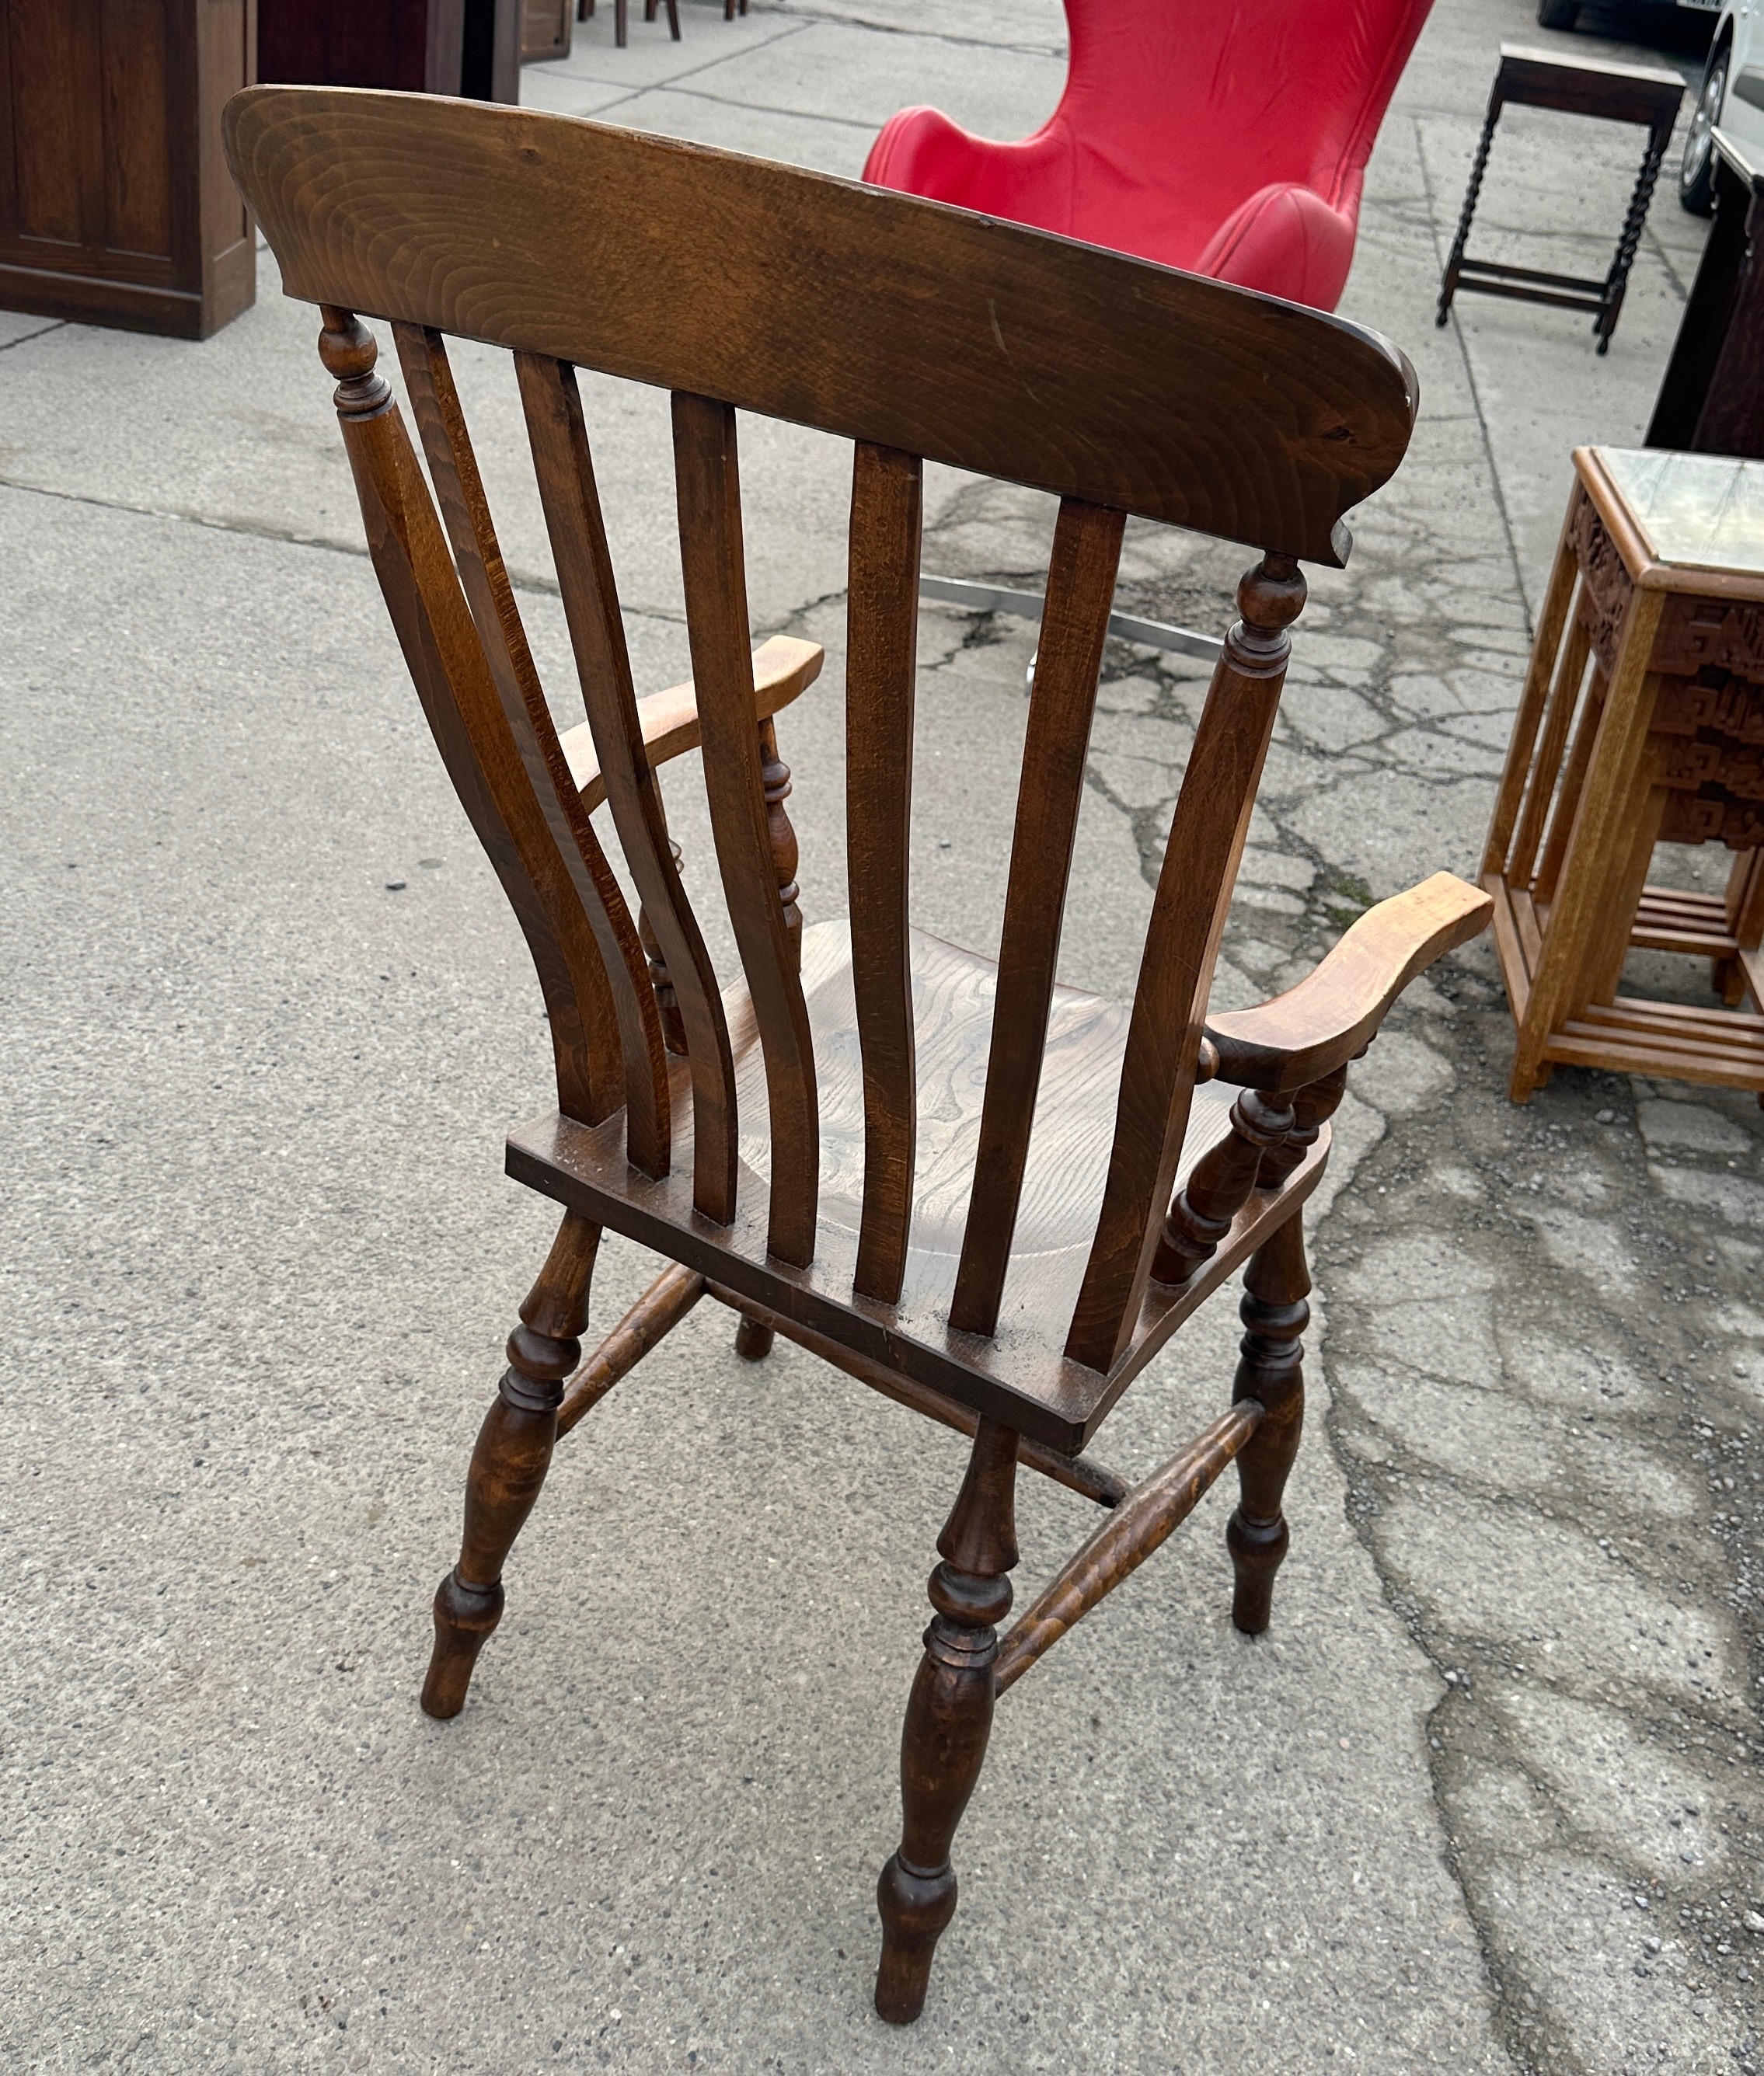 Antique windsor back chair - Image 3 of 3